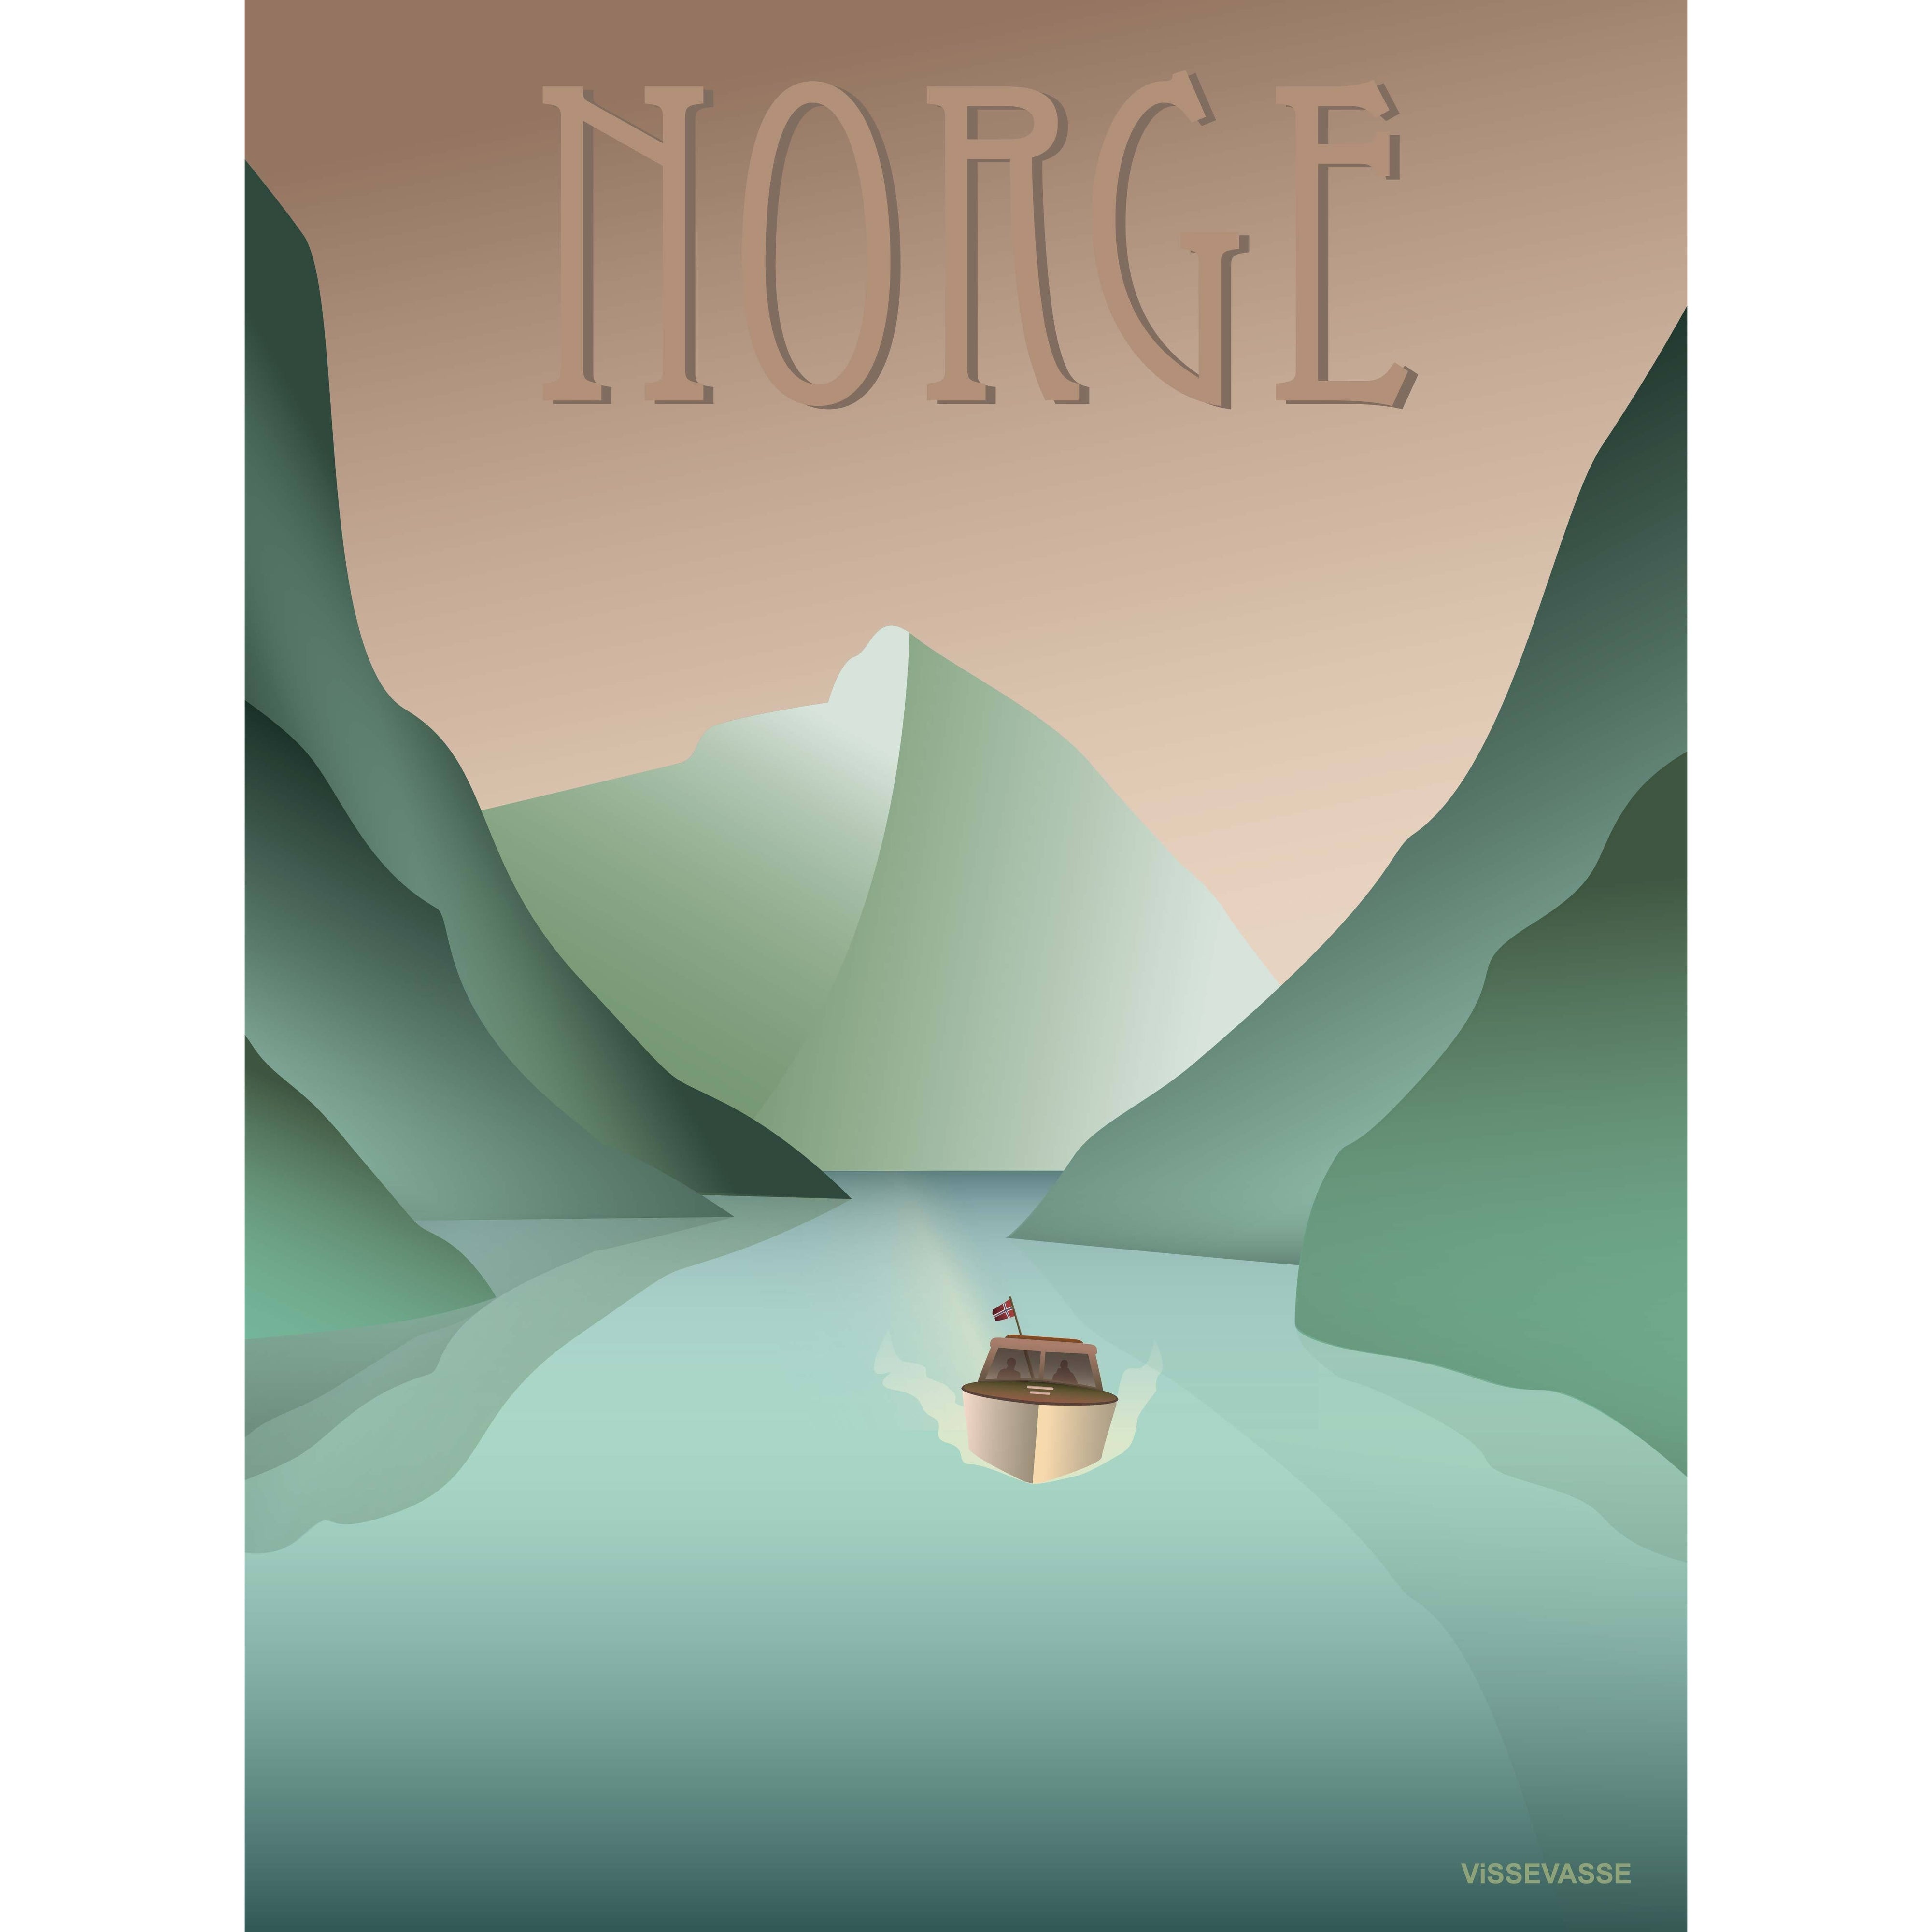 Vissevasse Noorwegen Fjord -poster, 15 x21 cm